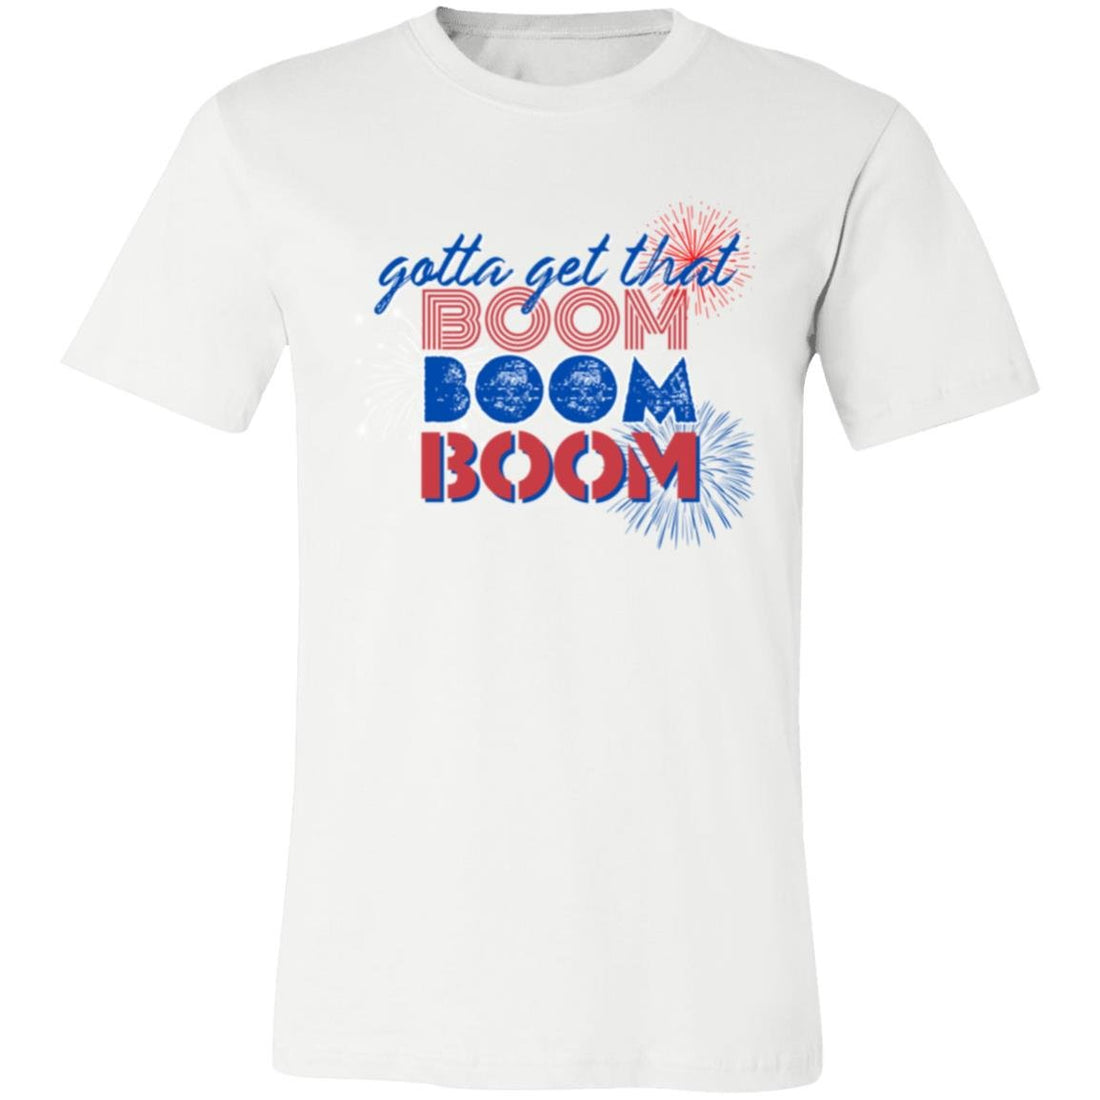 Boom Boom Boom T-Shirt - T-Shirts - Positively Sassy - Boom Boom Boom T-Shirt